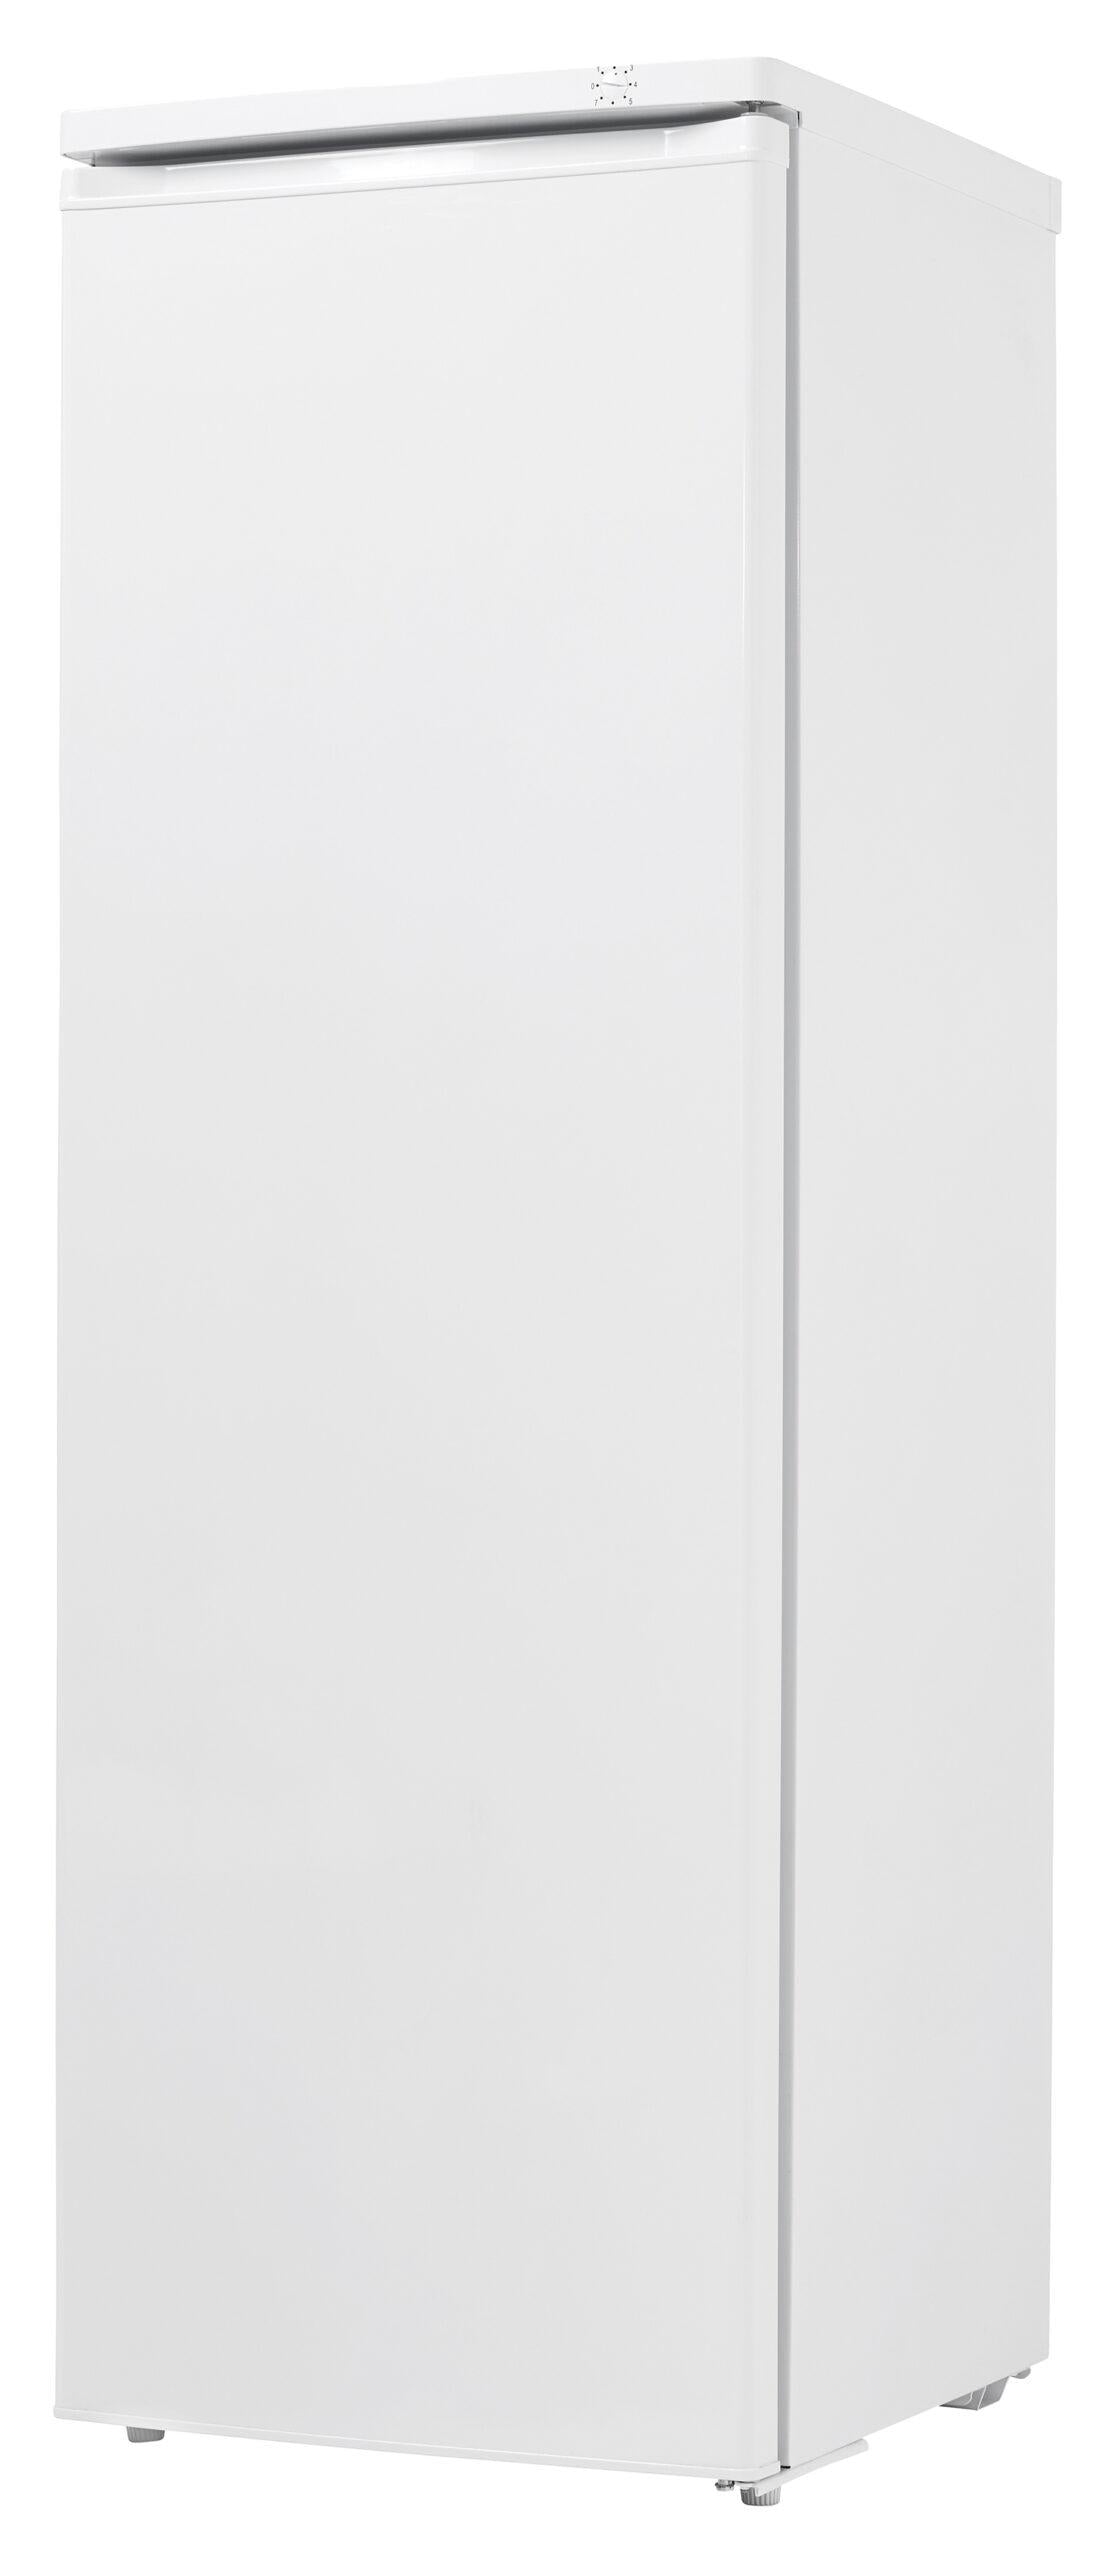 Danby 7.1 cu. ft. Upright Freezer in White